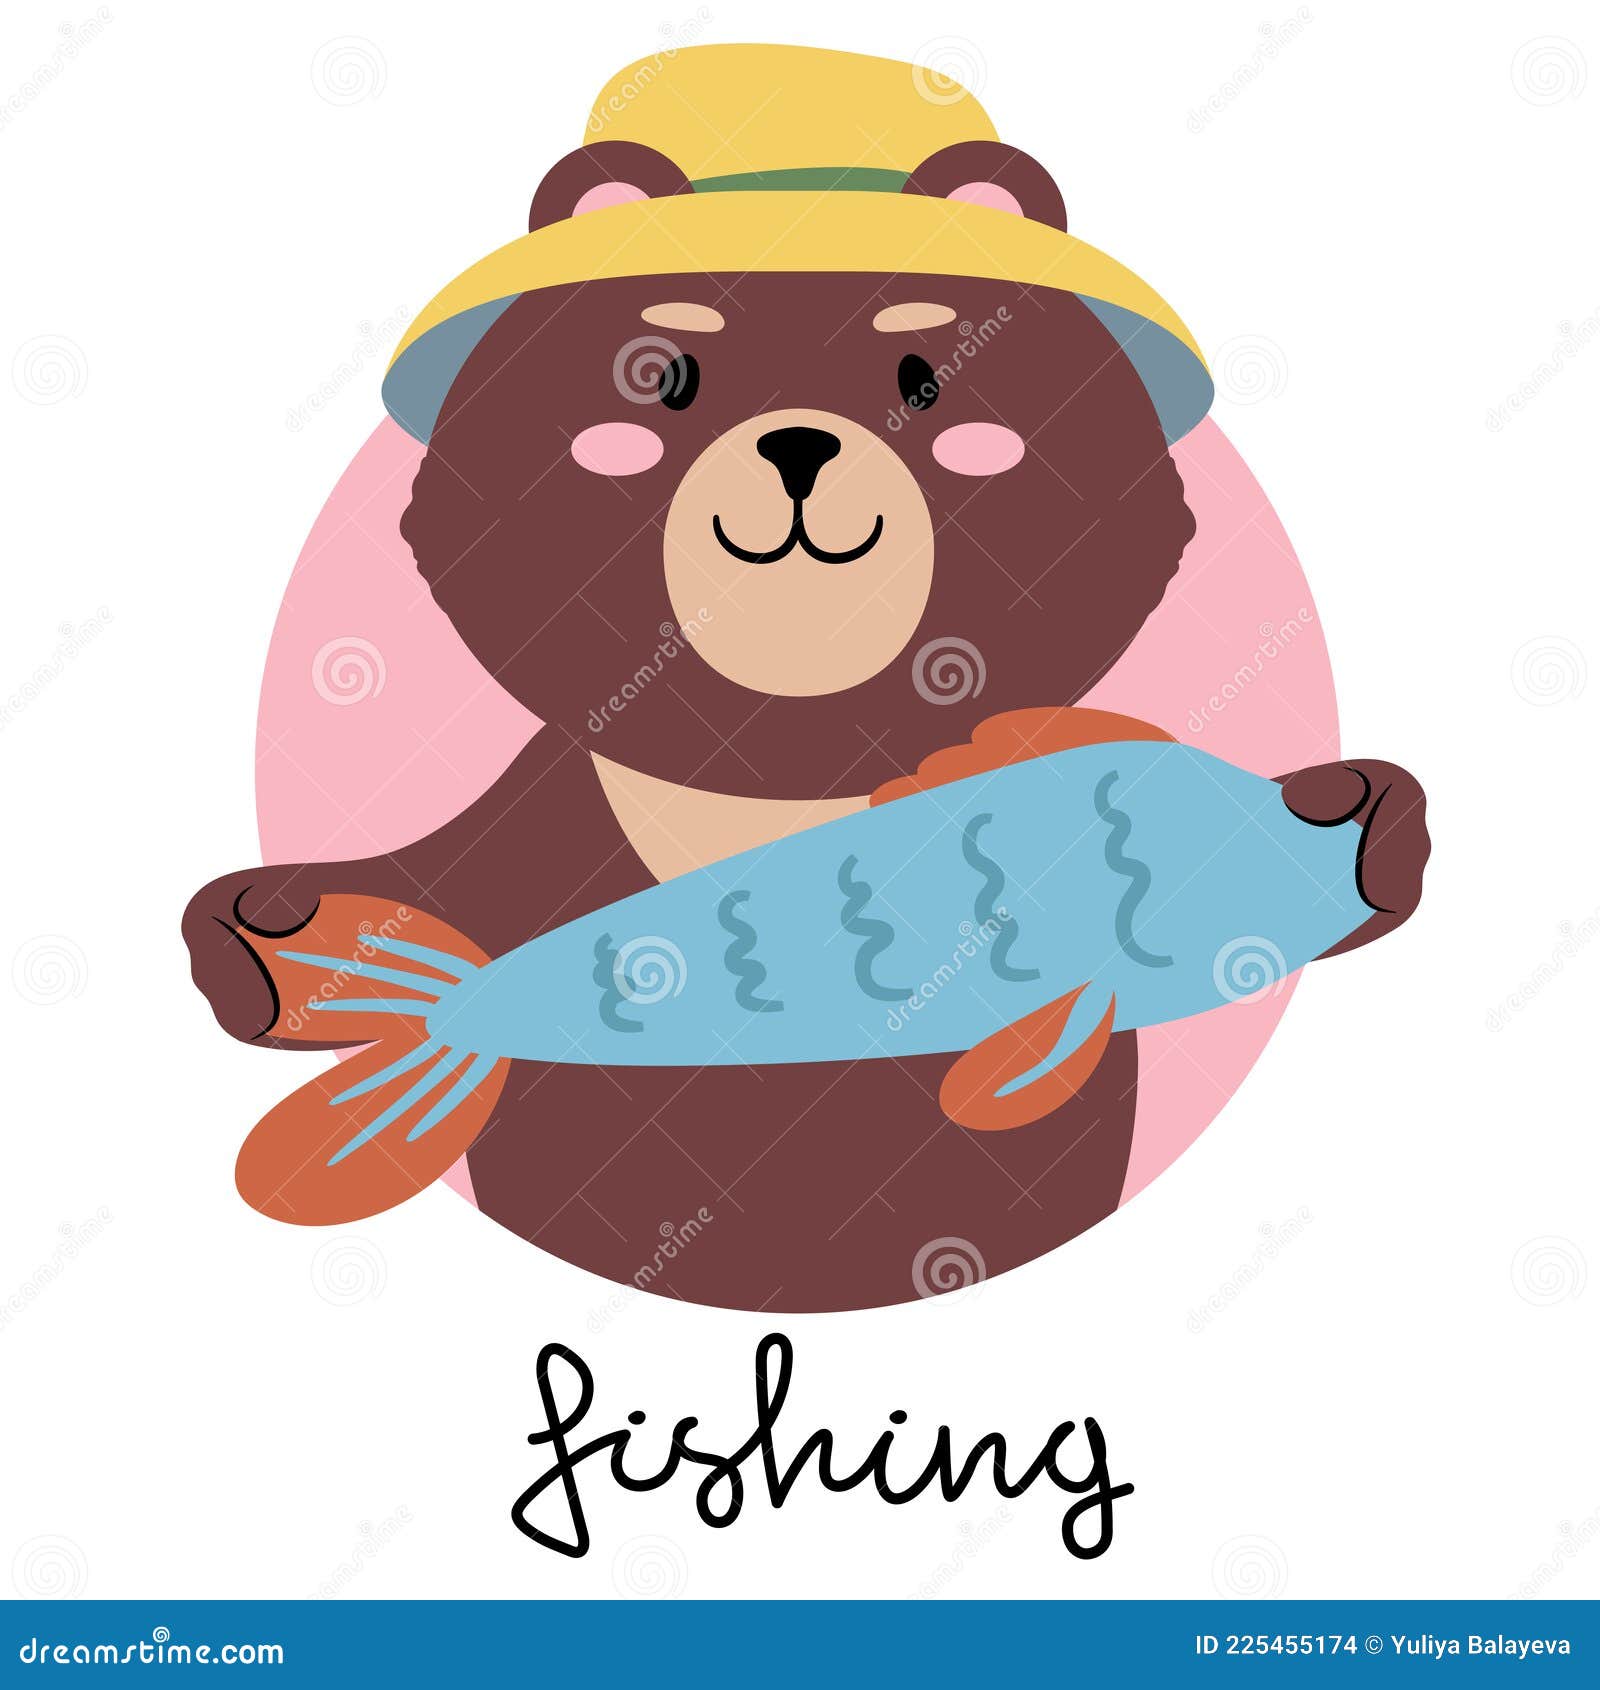 Vector Illustration of a Cute Cartoon Teddy Bear in a Hat with a